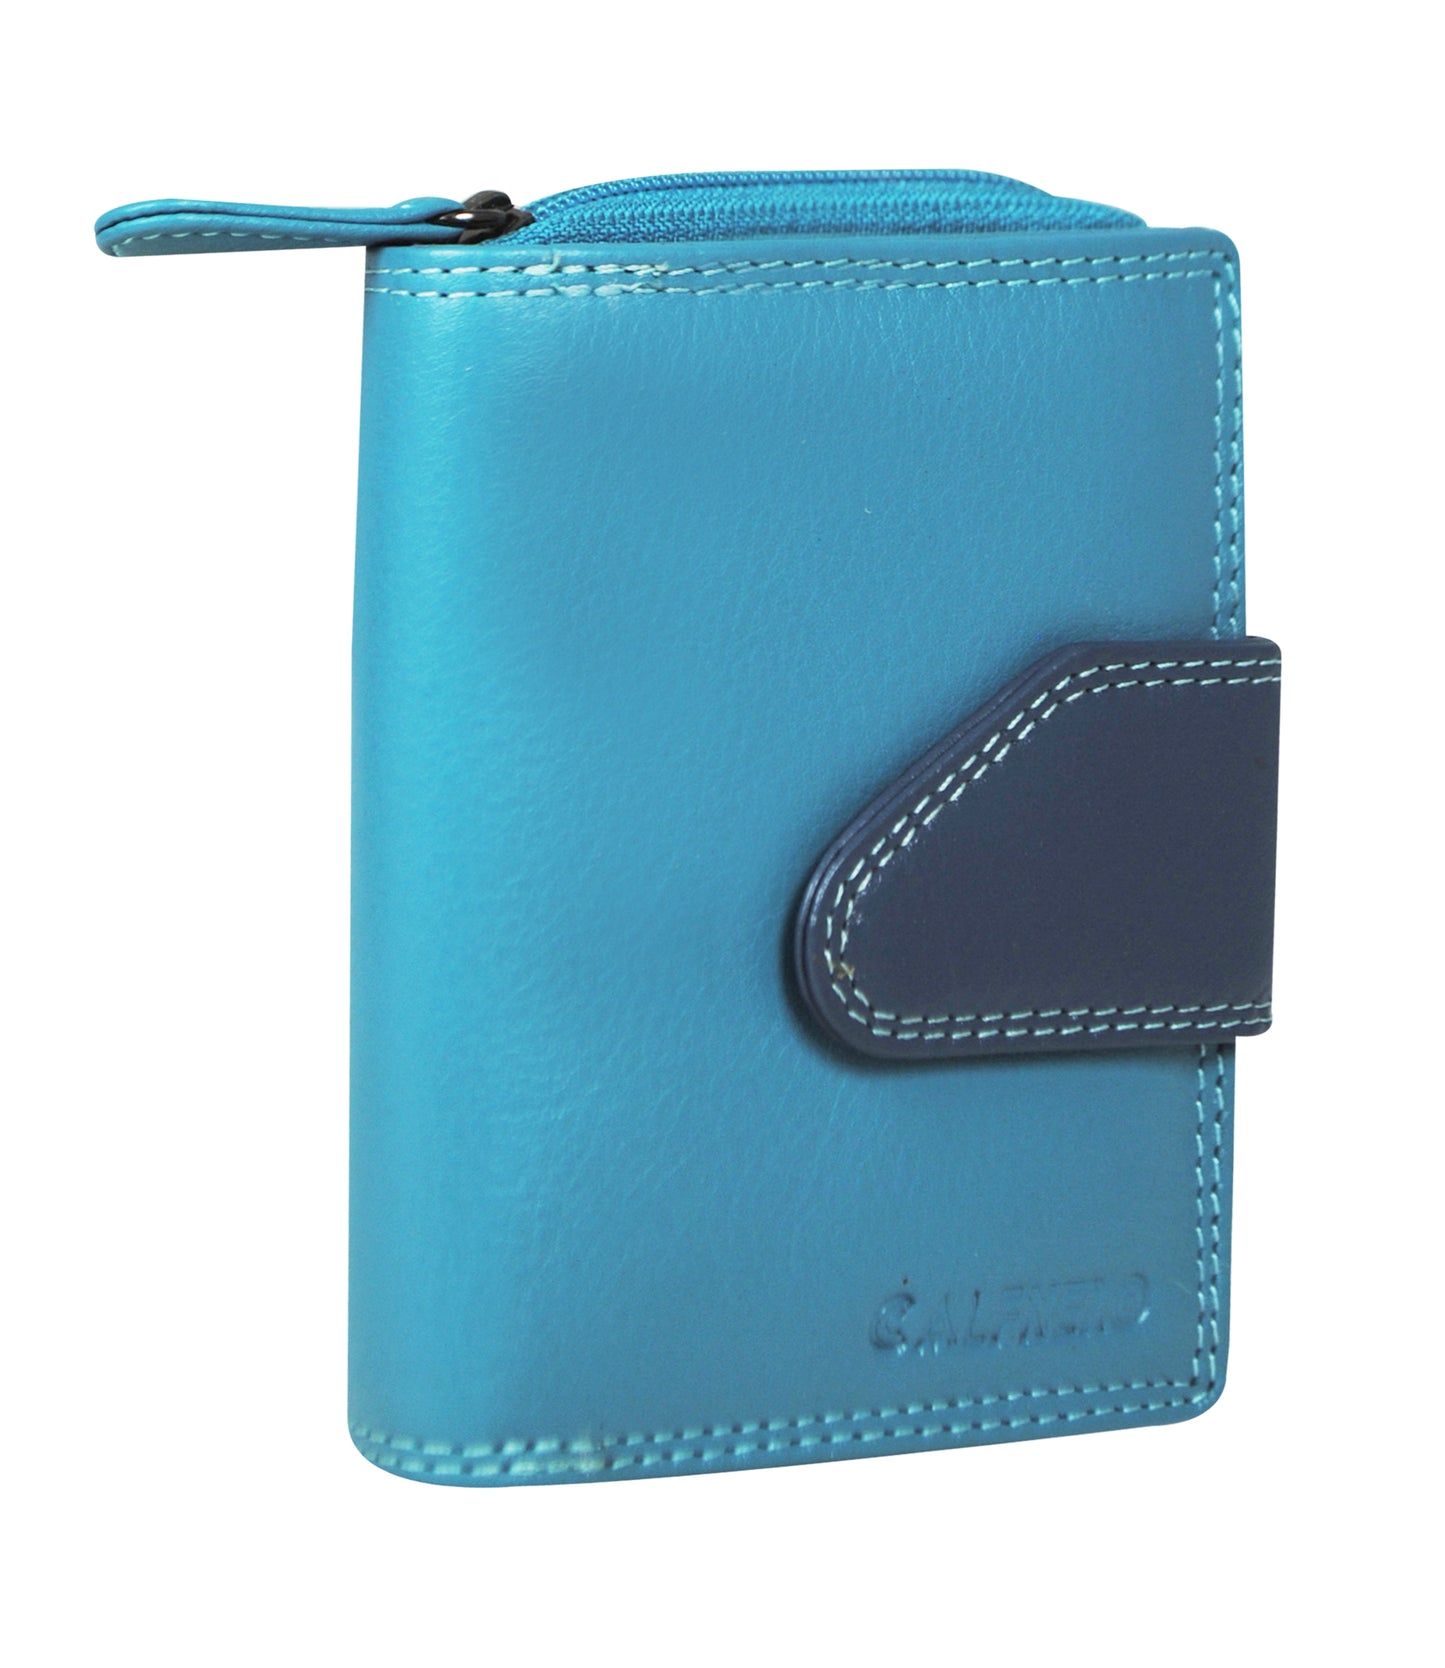 Calfnero Genuine Leather Women's Wallet (AK-181-Ferozi-Multi)